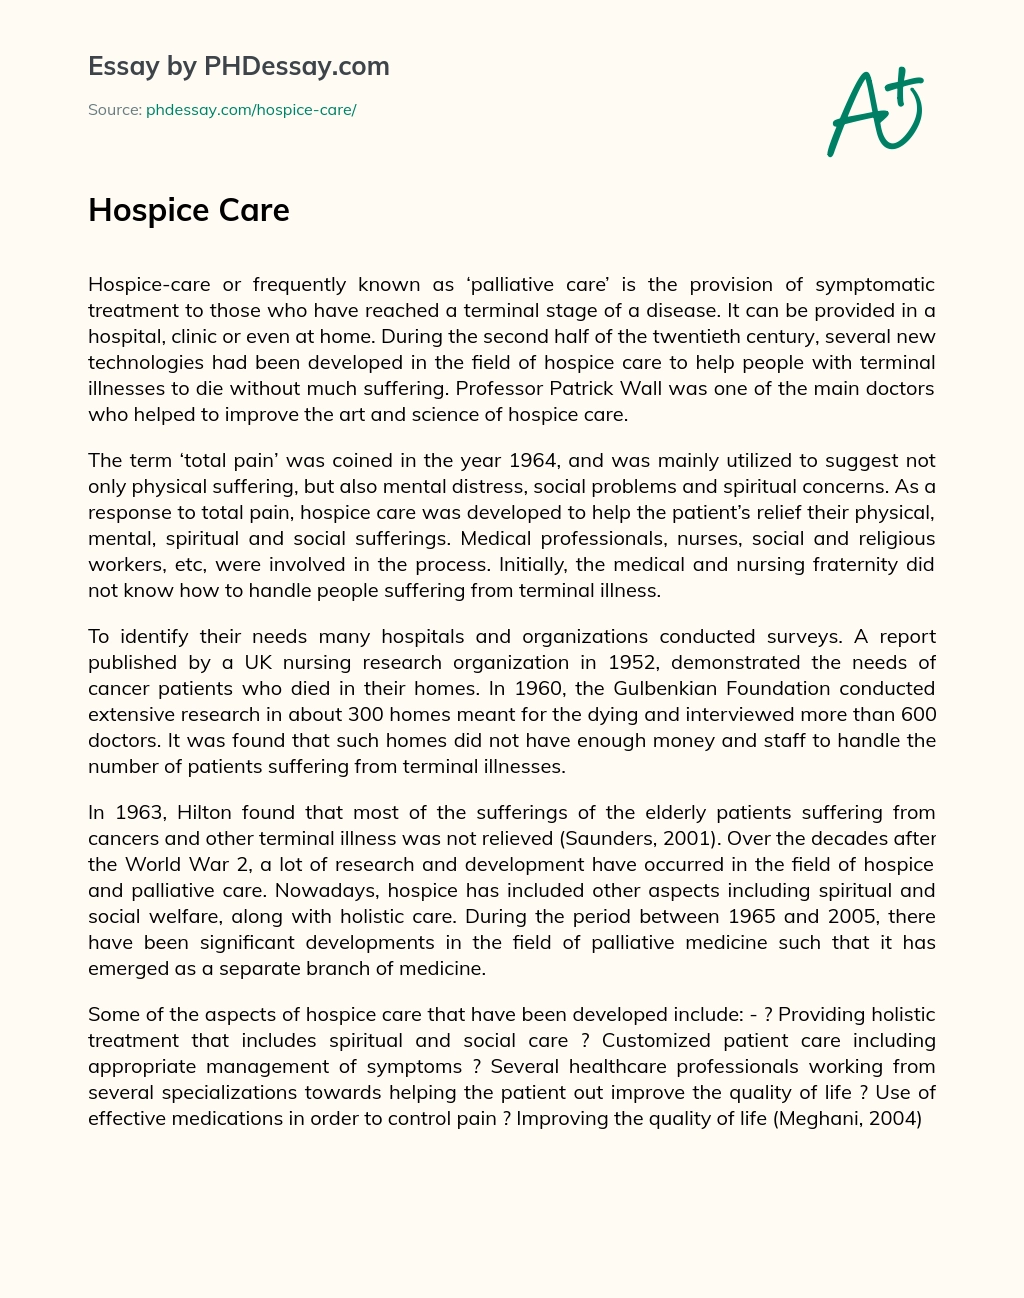 Hospice Care essay